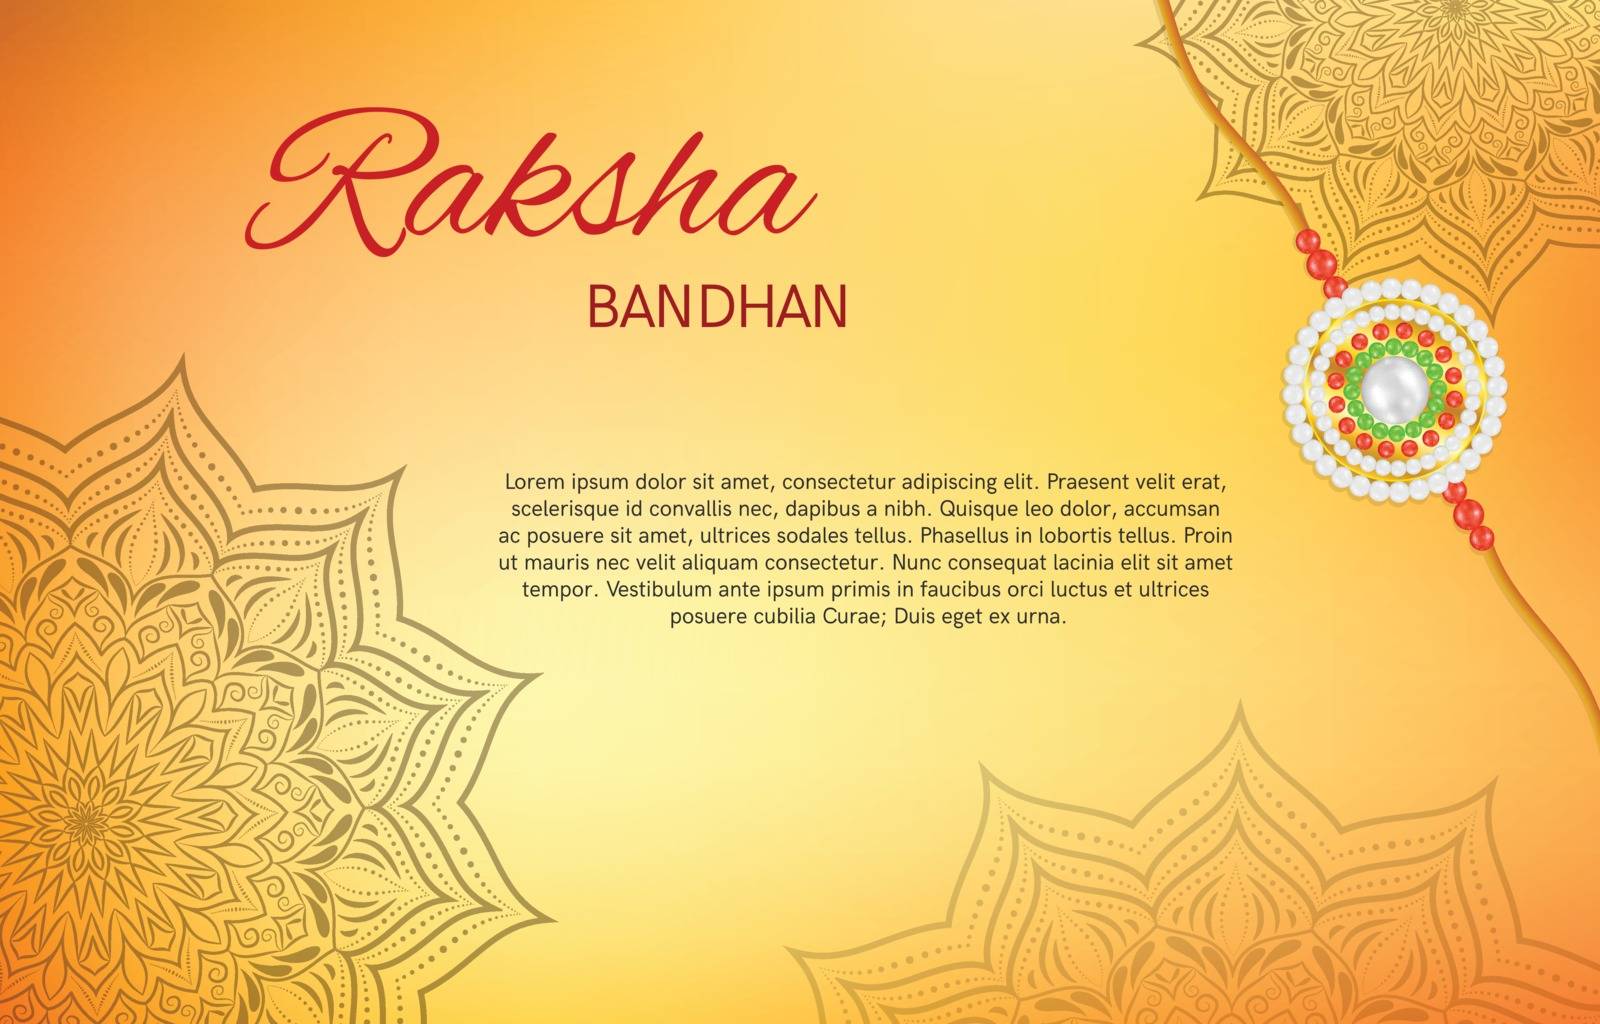 Raksha Bandhan indian holiday design with handwritten text. Rakhi in the corner with pearls decoration. Mandala on yellow and orange gradient background.